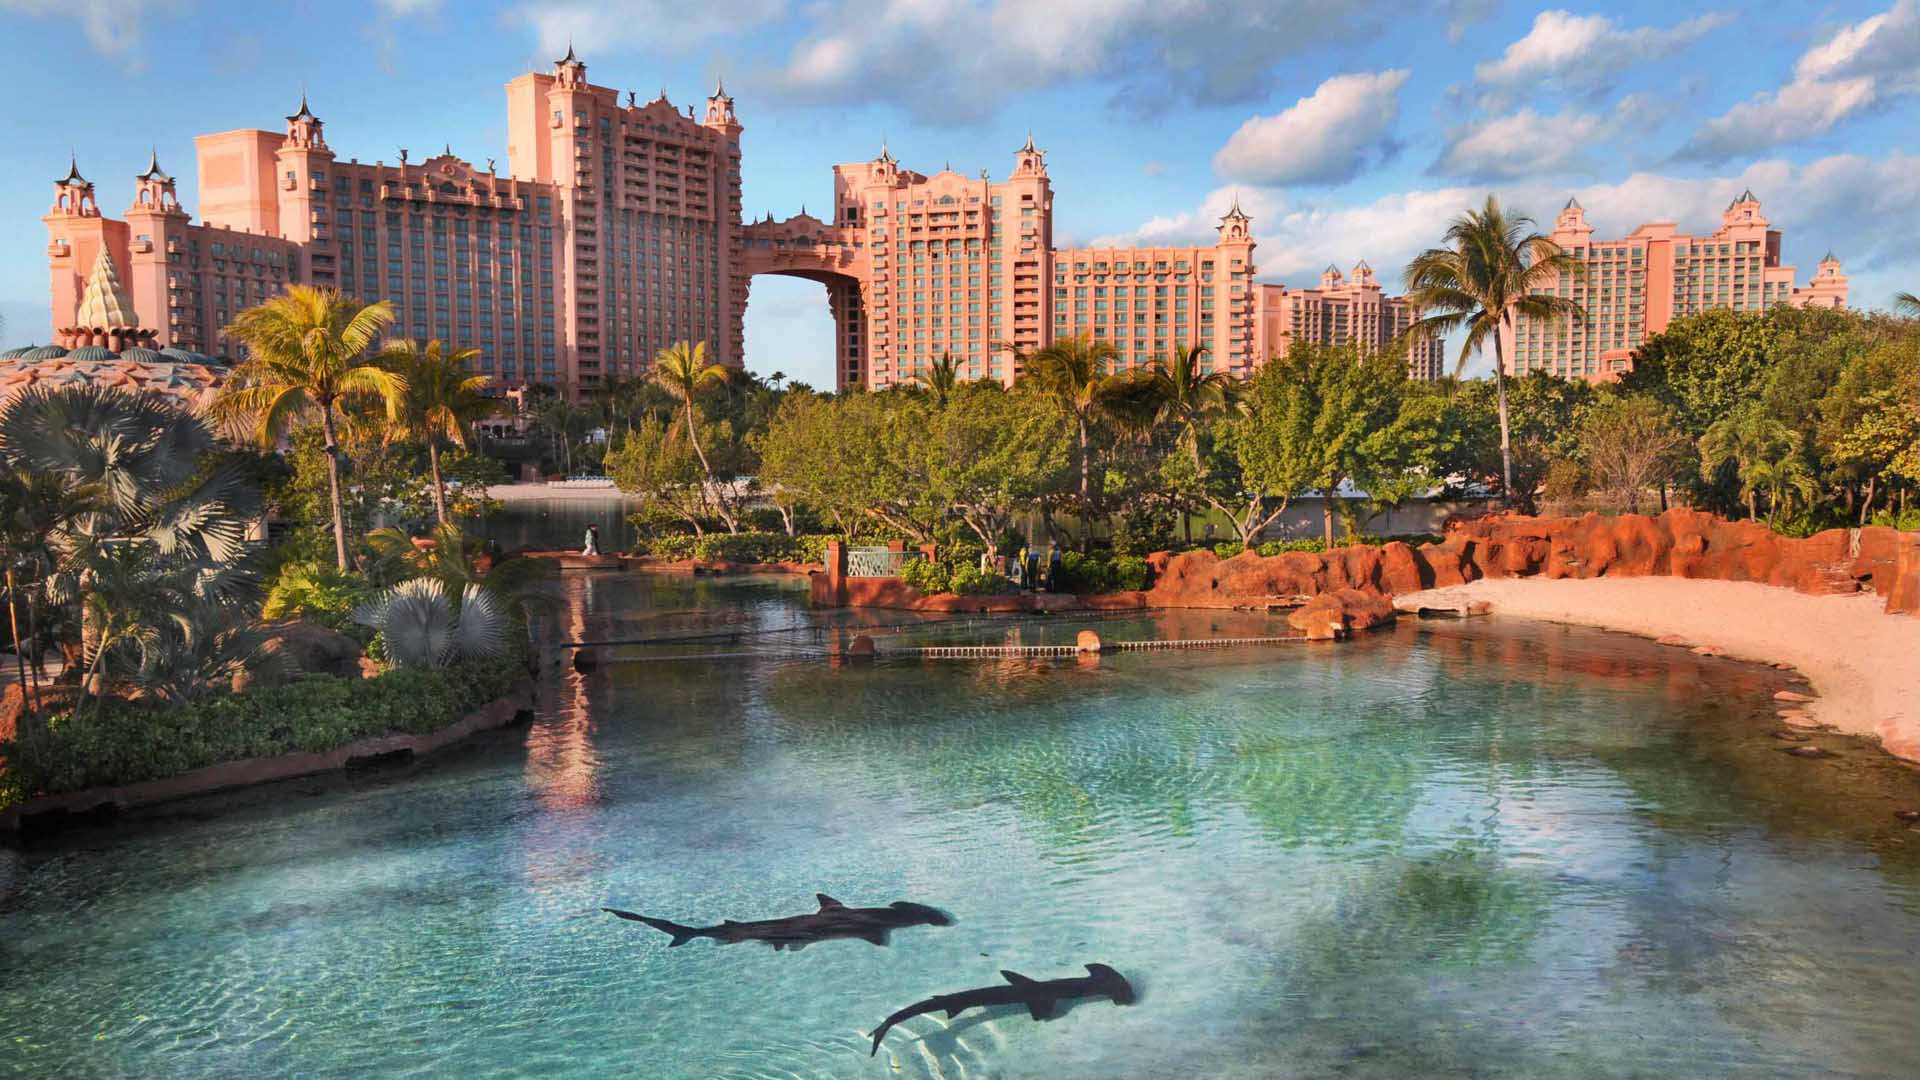 Bahamas Royal Atlantis View Wallpaper